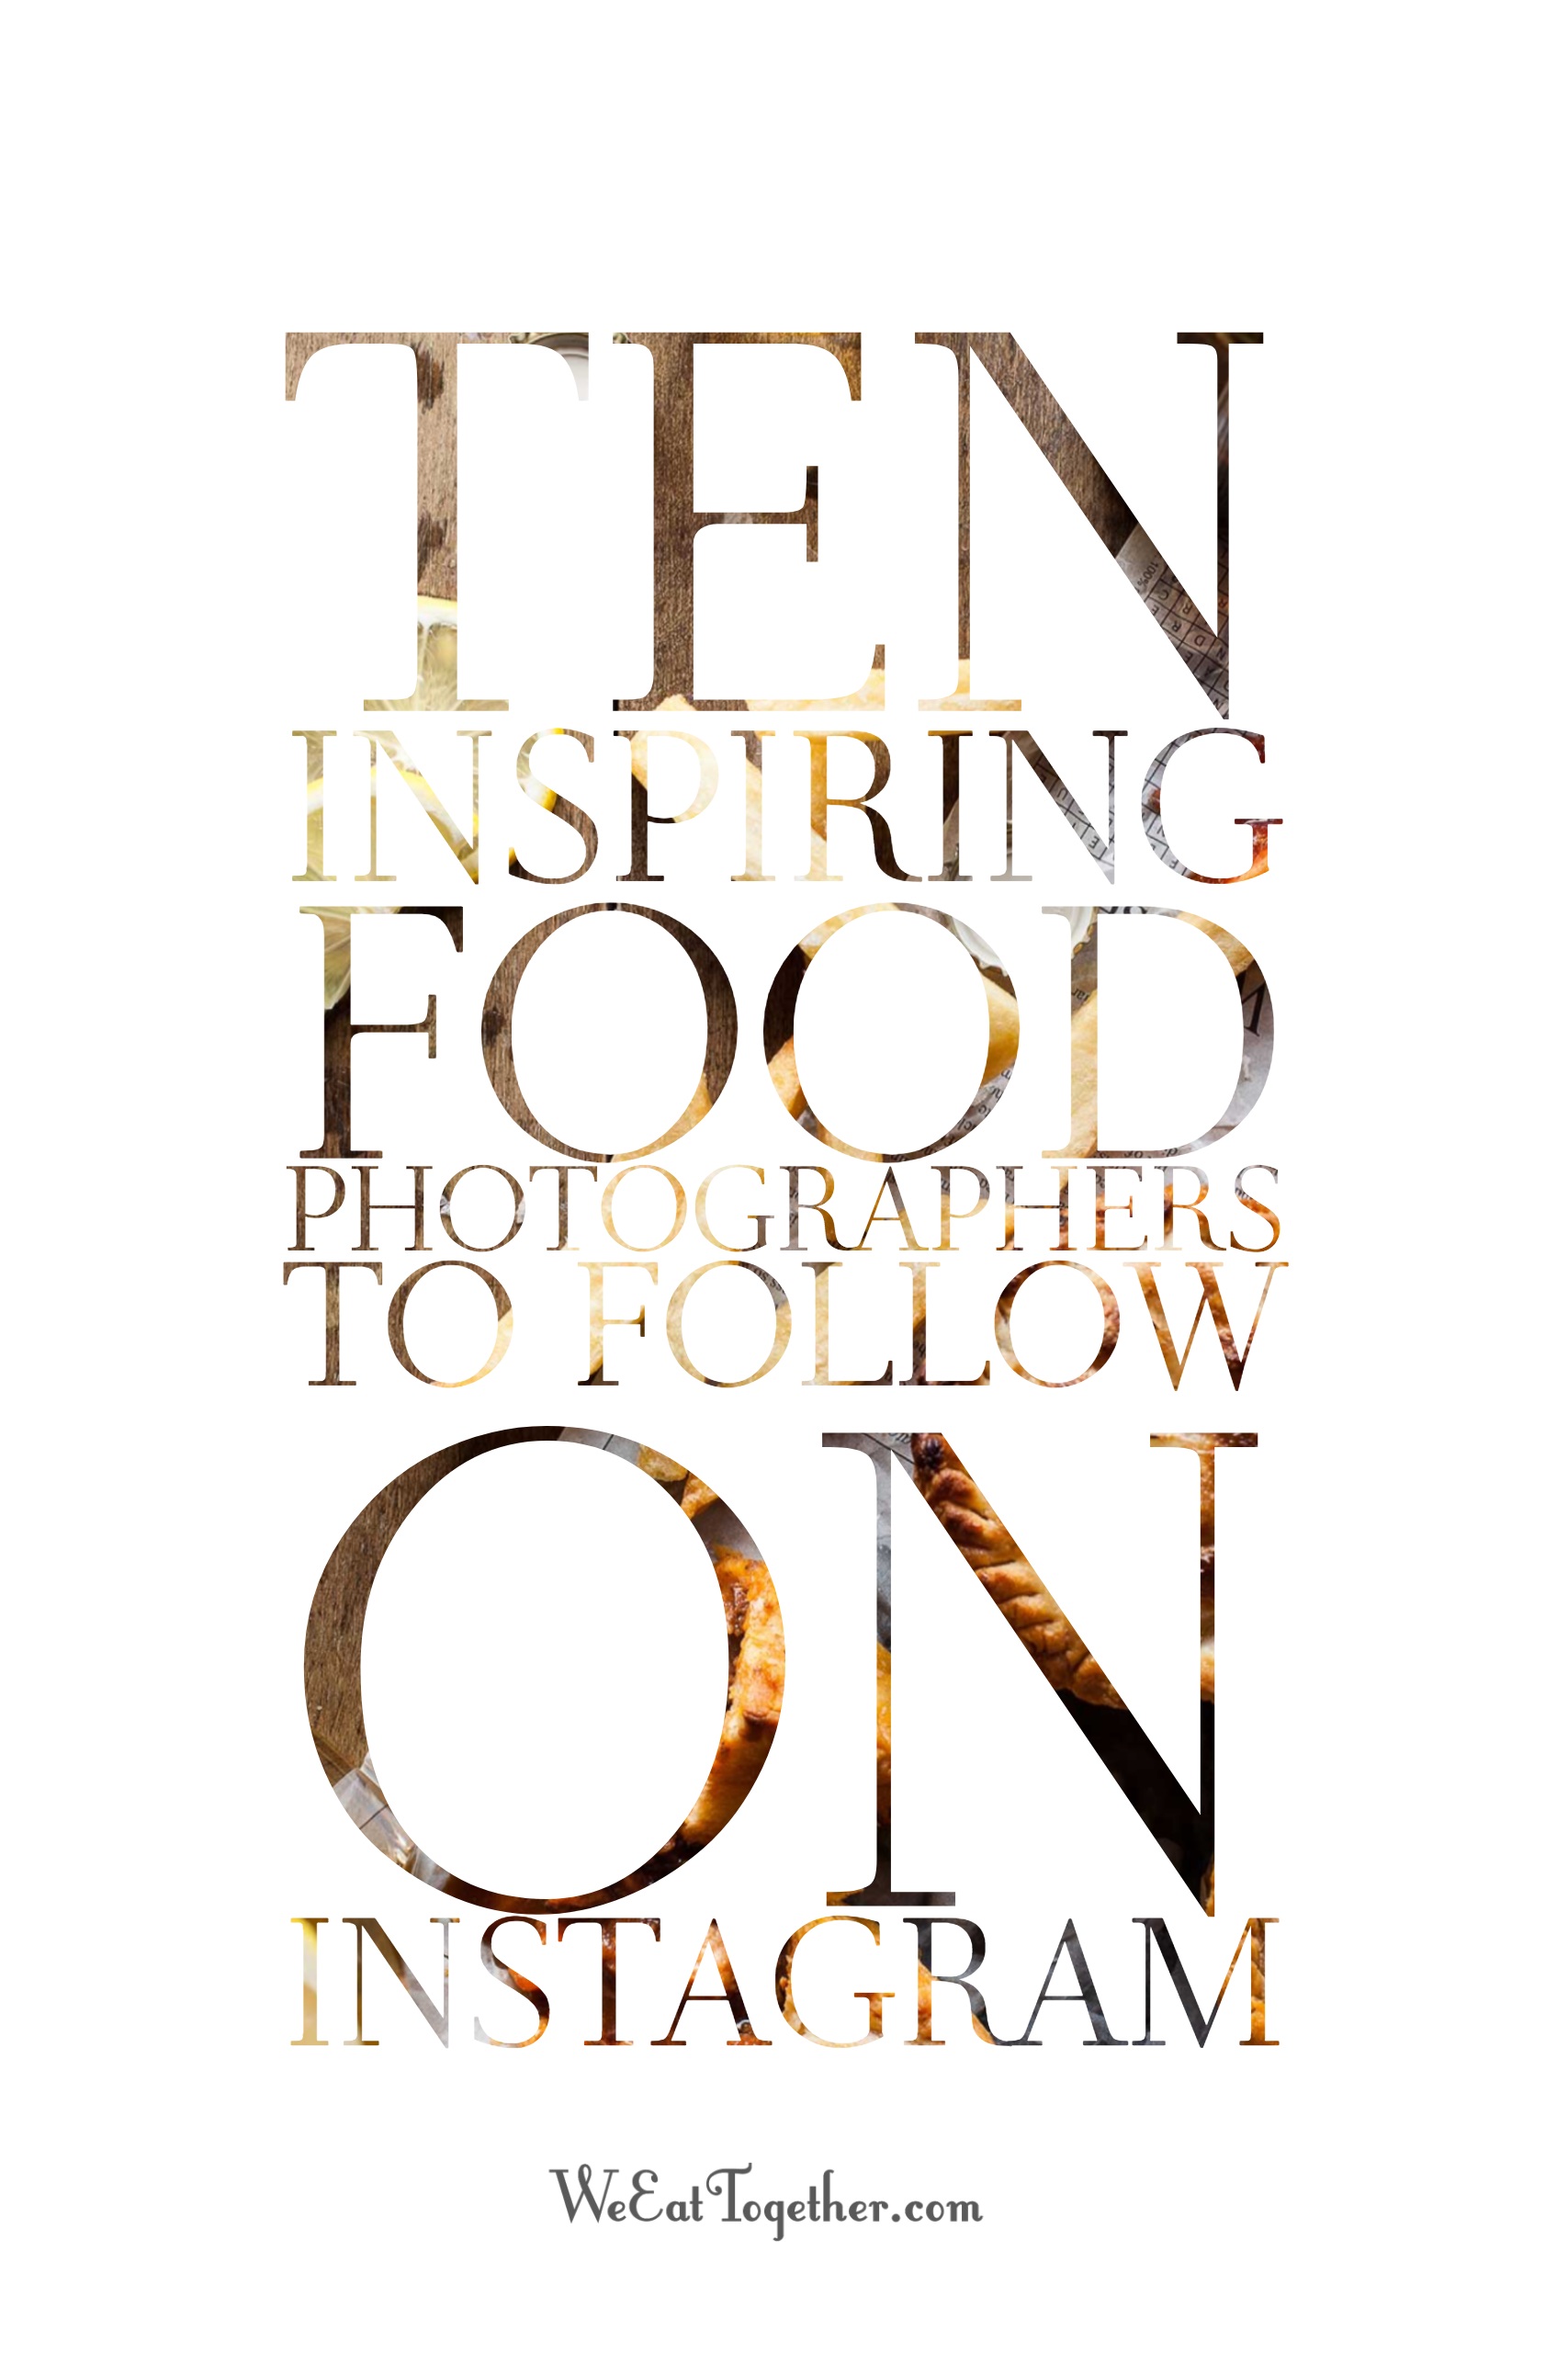 Ten Inspiring Food Photographers To Follow On Instagram